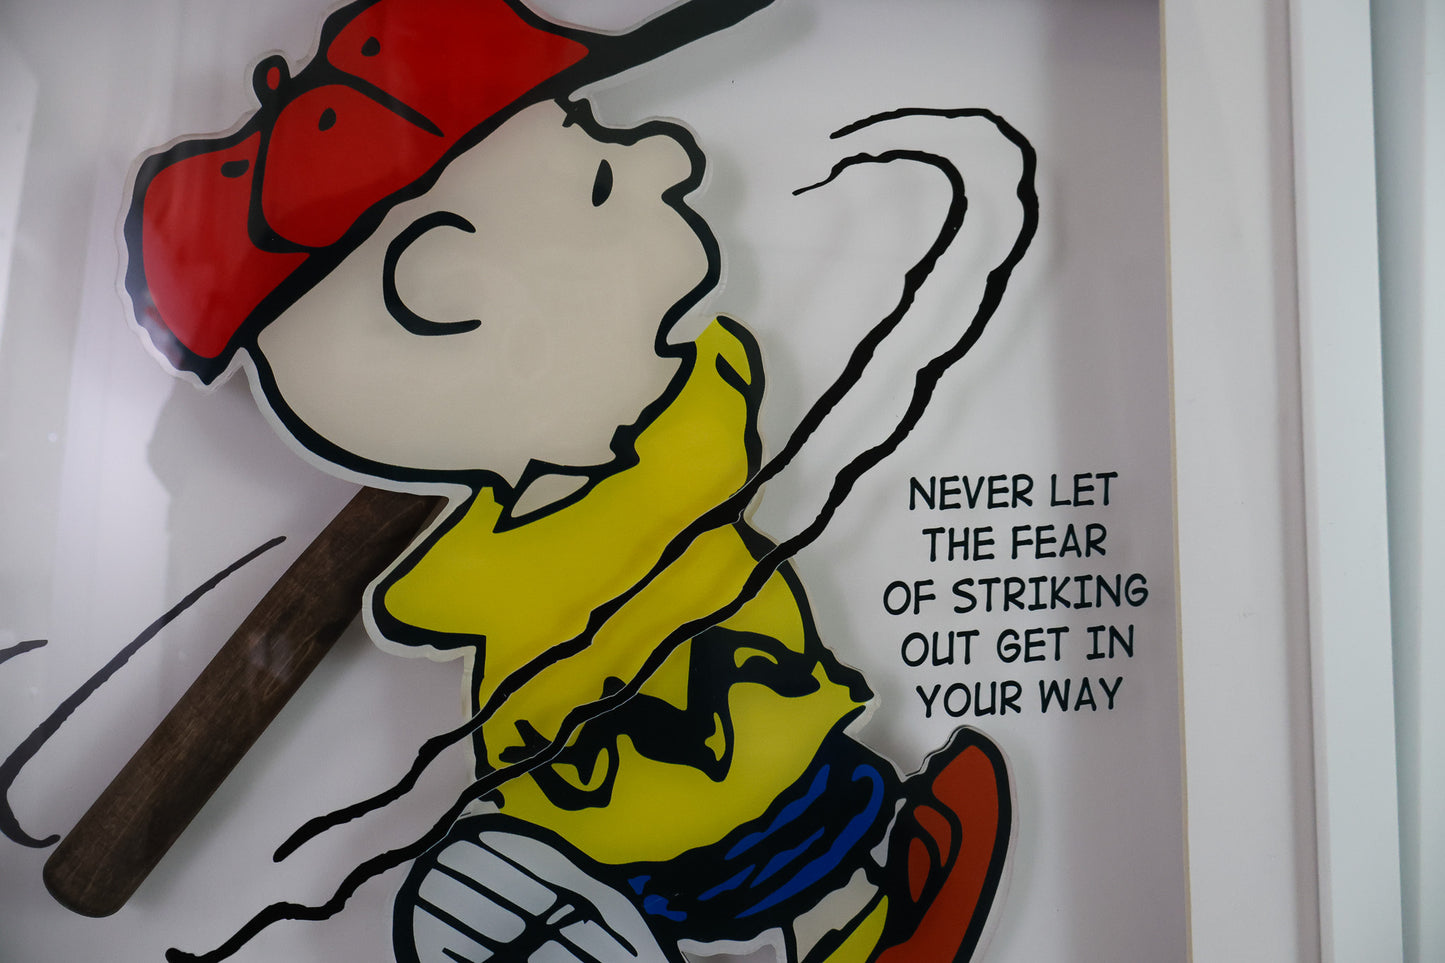 Charlie Brown & Snoopy Baseball Framed Set